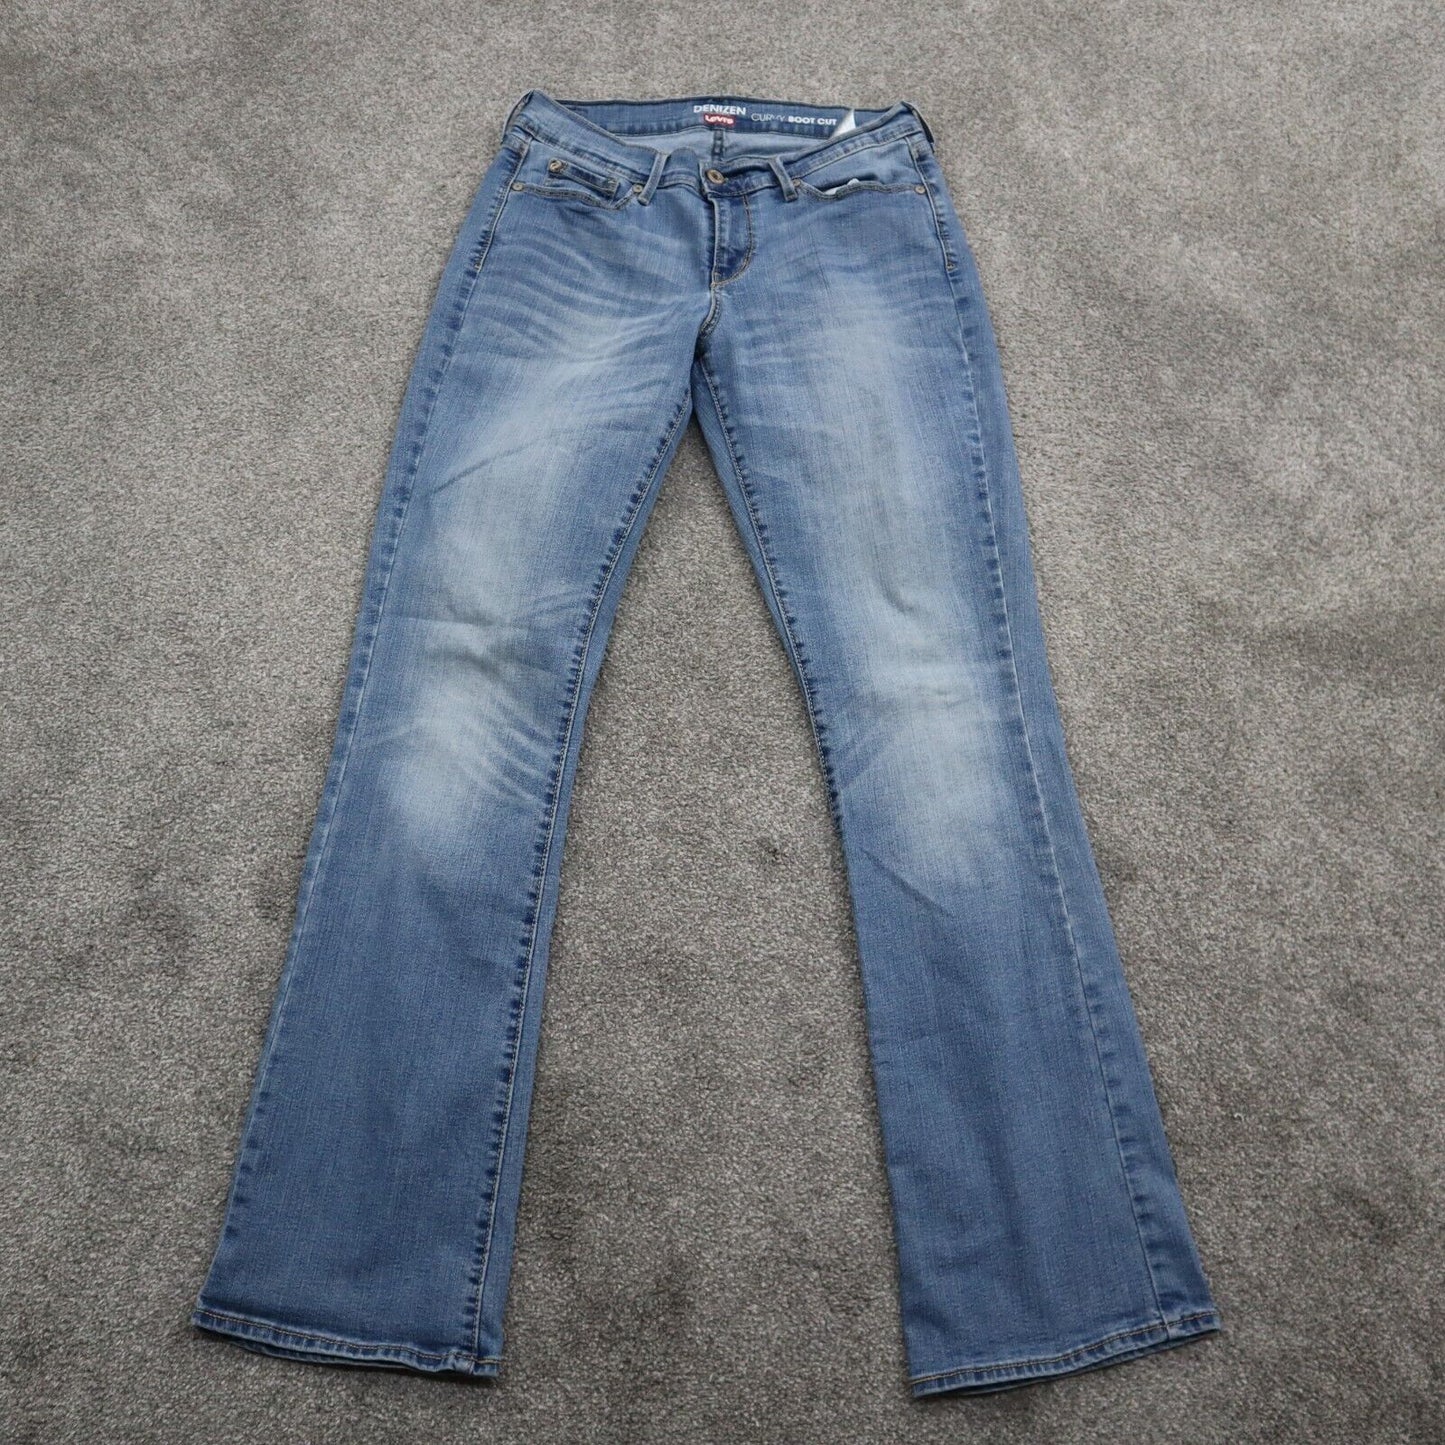 Levi Strauss Mens Denizen Curvy Boot Cut Denim Jeans Mid Rise Blue Size 8M